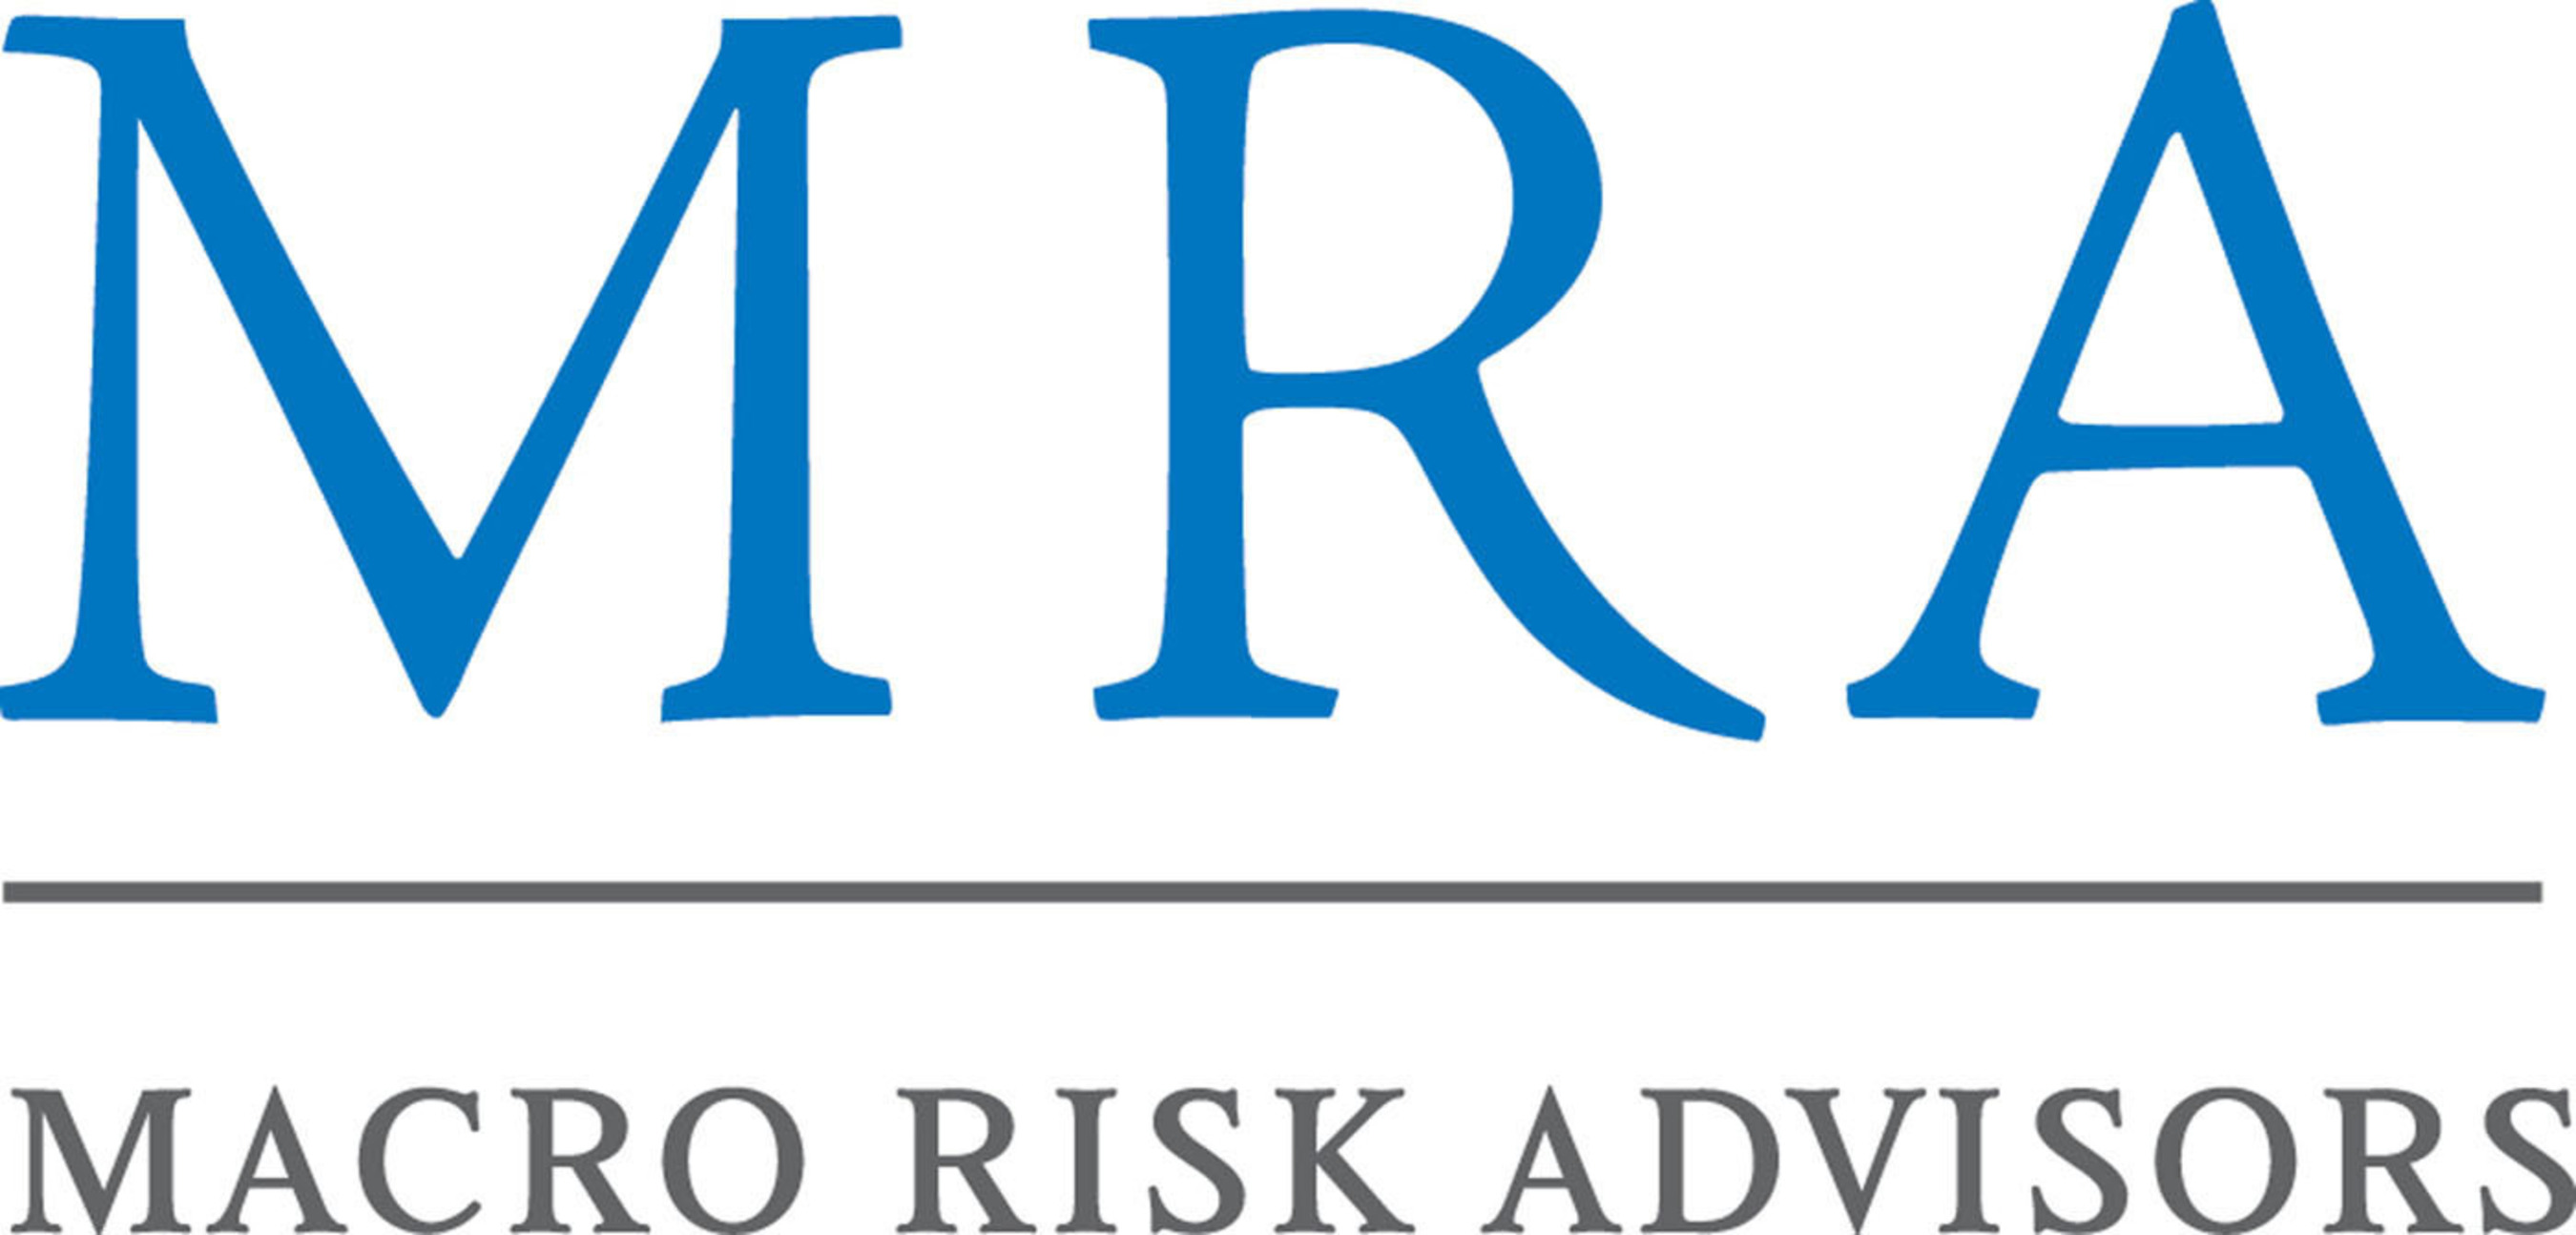 Risk Analysis on the Leading Edge. (PRNewsFoto/Macro Risk Advisors LLC) (PRNewsFoto/MACRO RISK ADVISORS LLC)